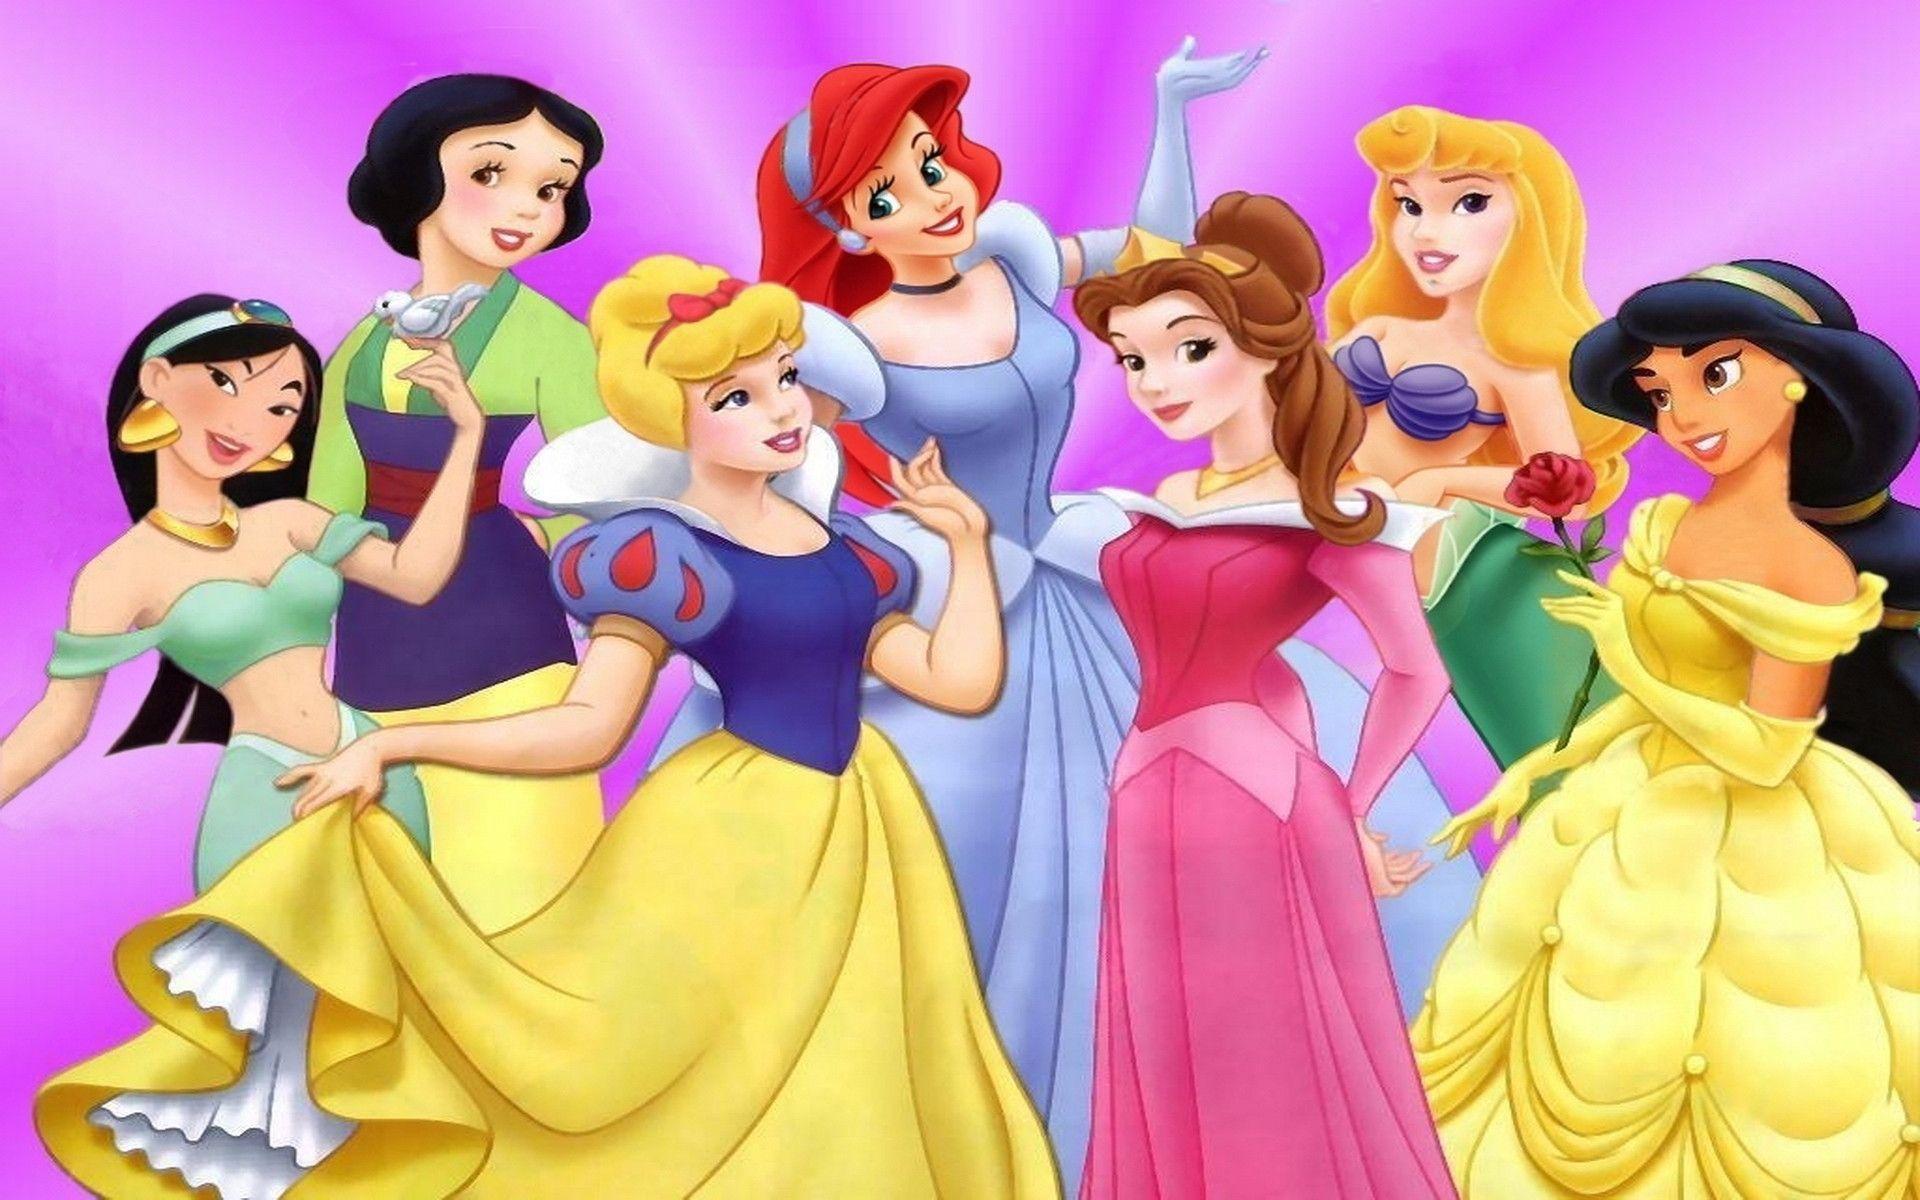 Free Desktop Wallpaper: Disney Princess Belle Wallpaper